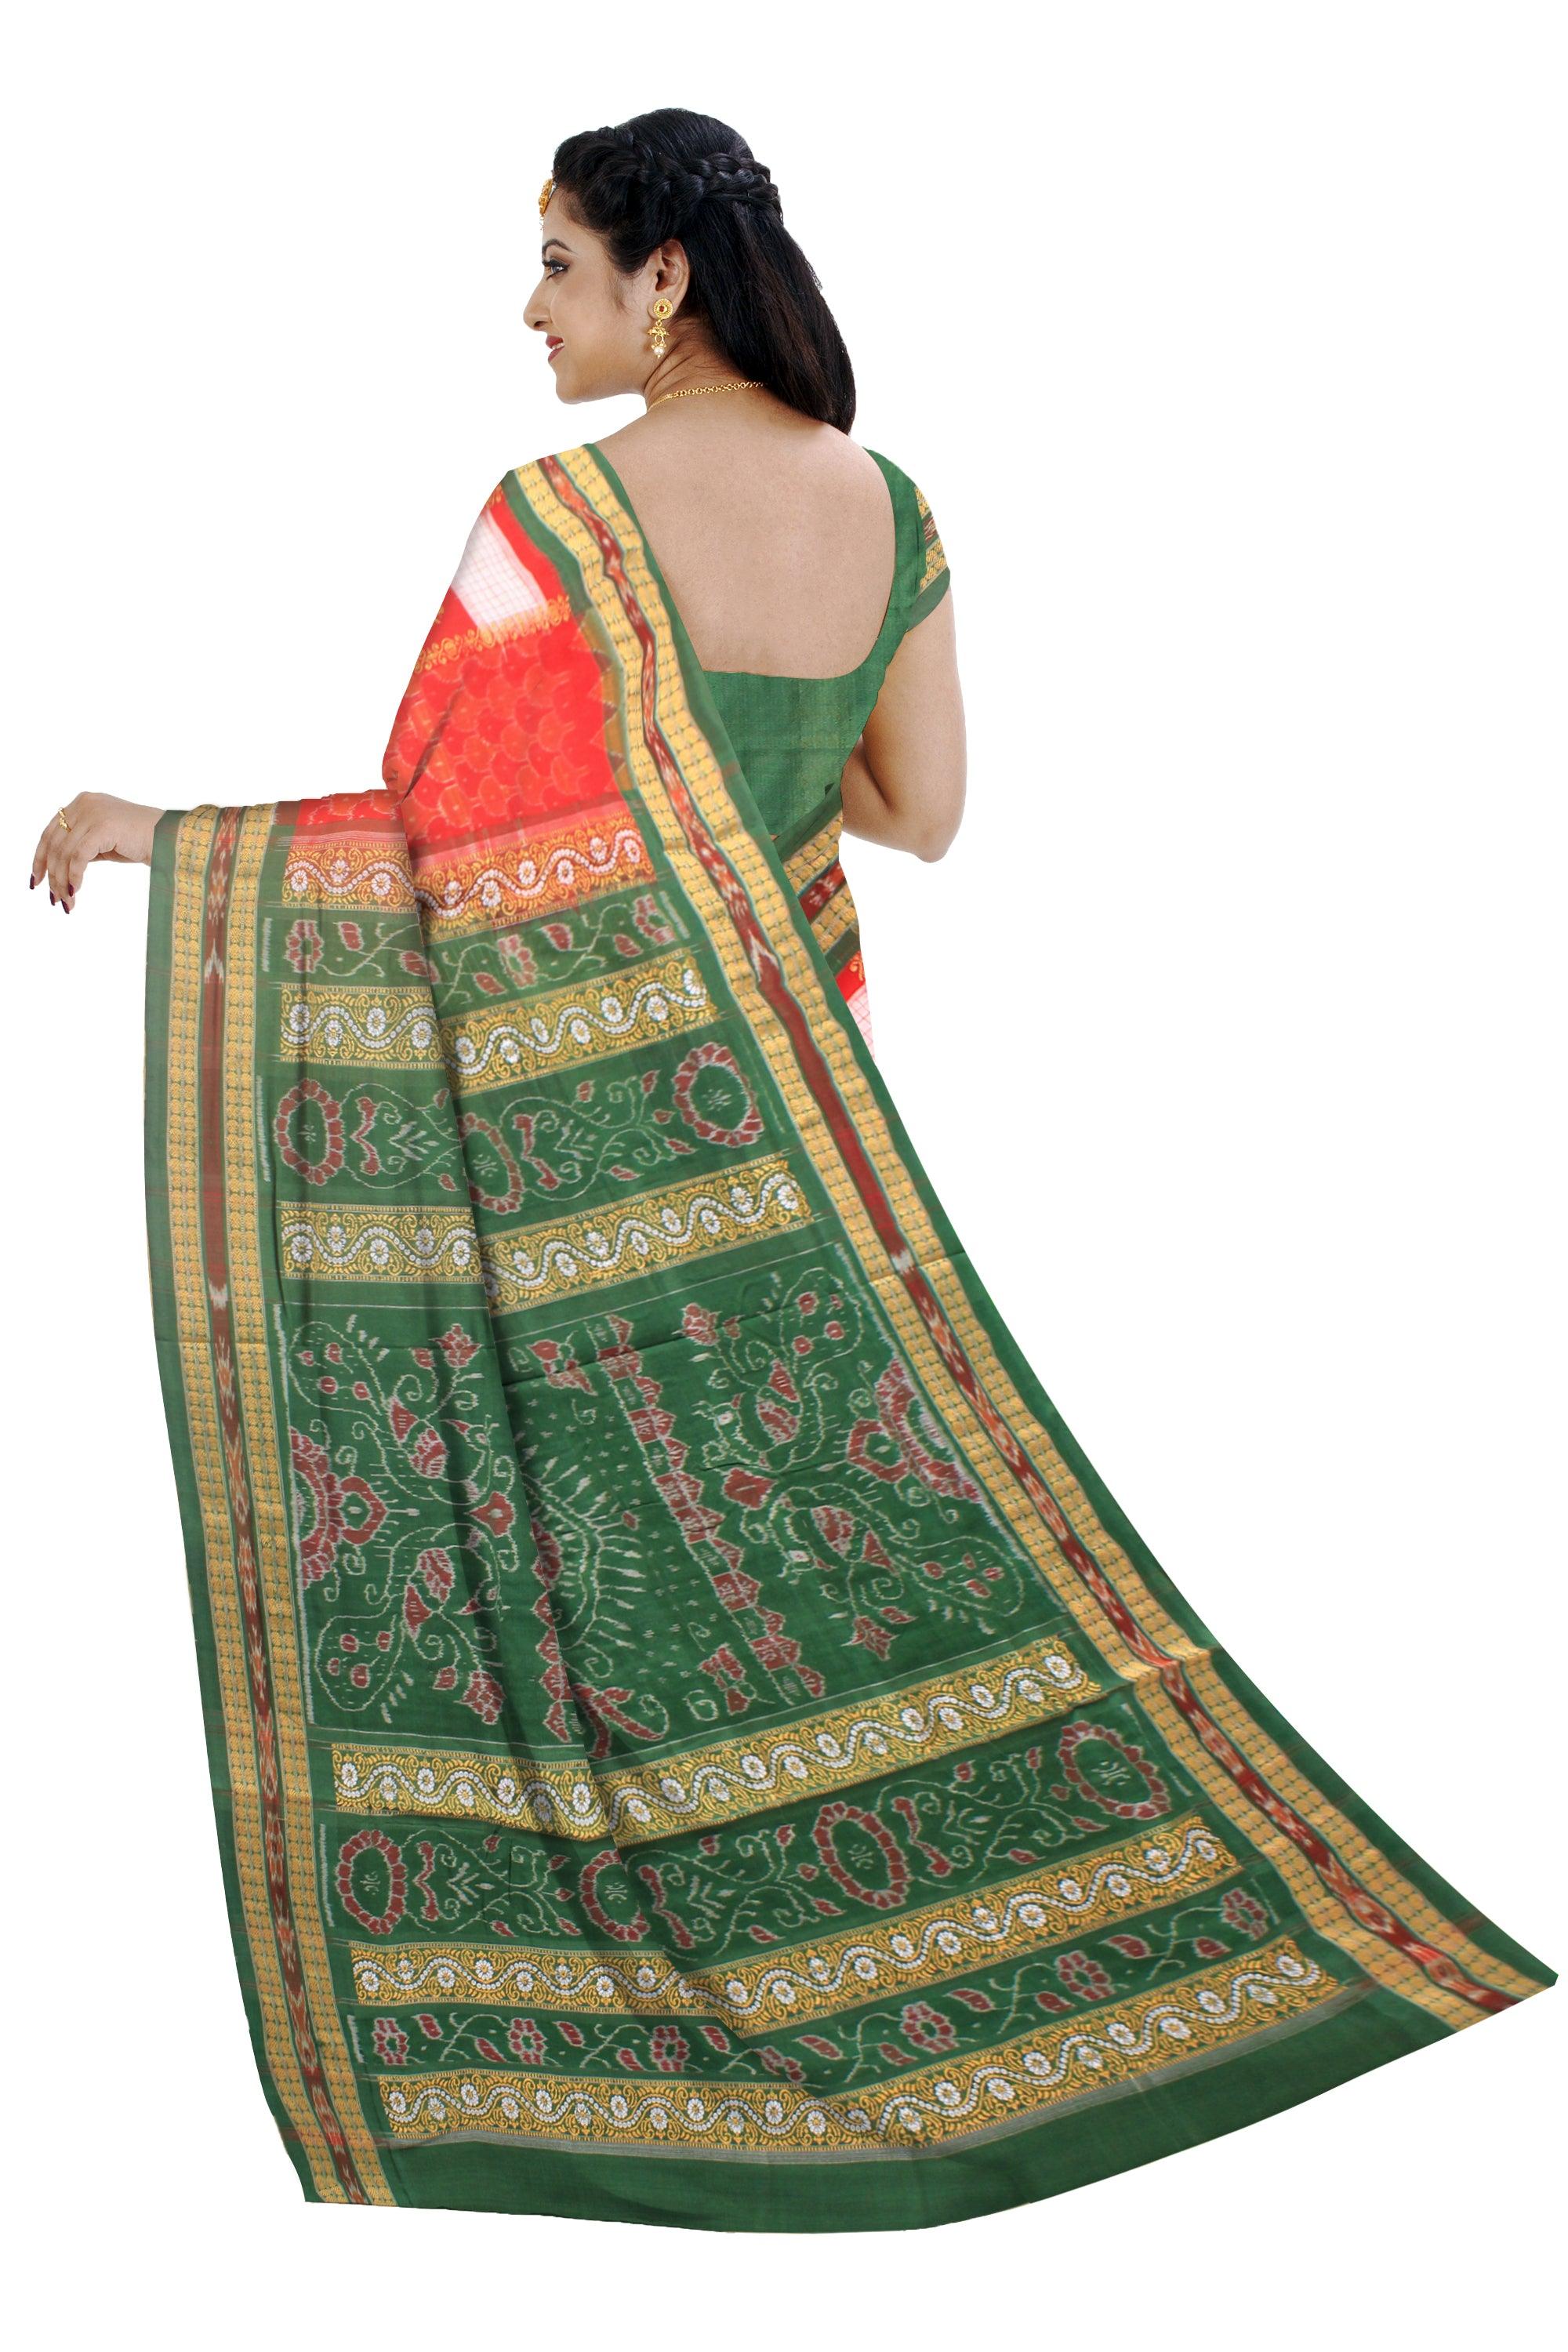 Sambalpuri cotton saree in Orange and Green color with blouse piece. - Koshali Arts & Crafts Enterprise